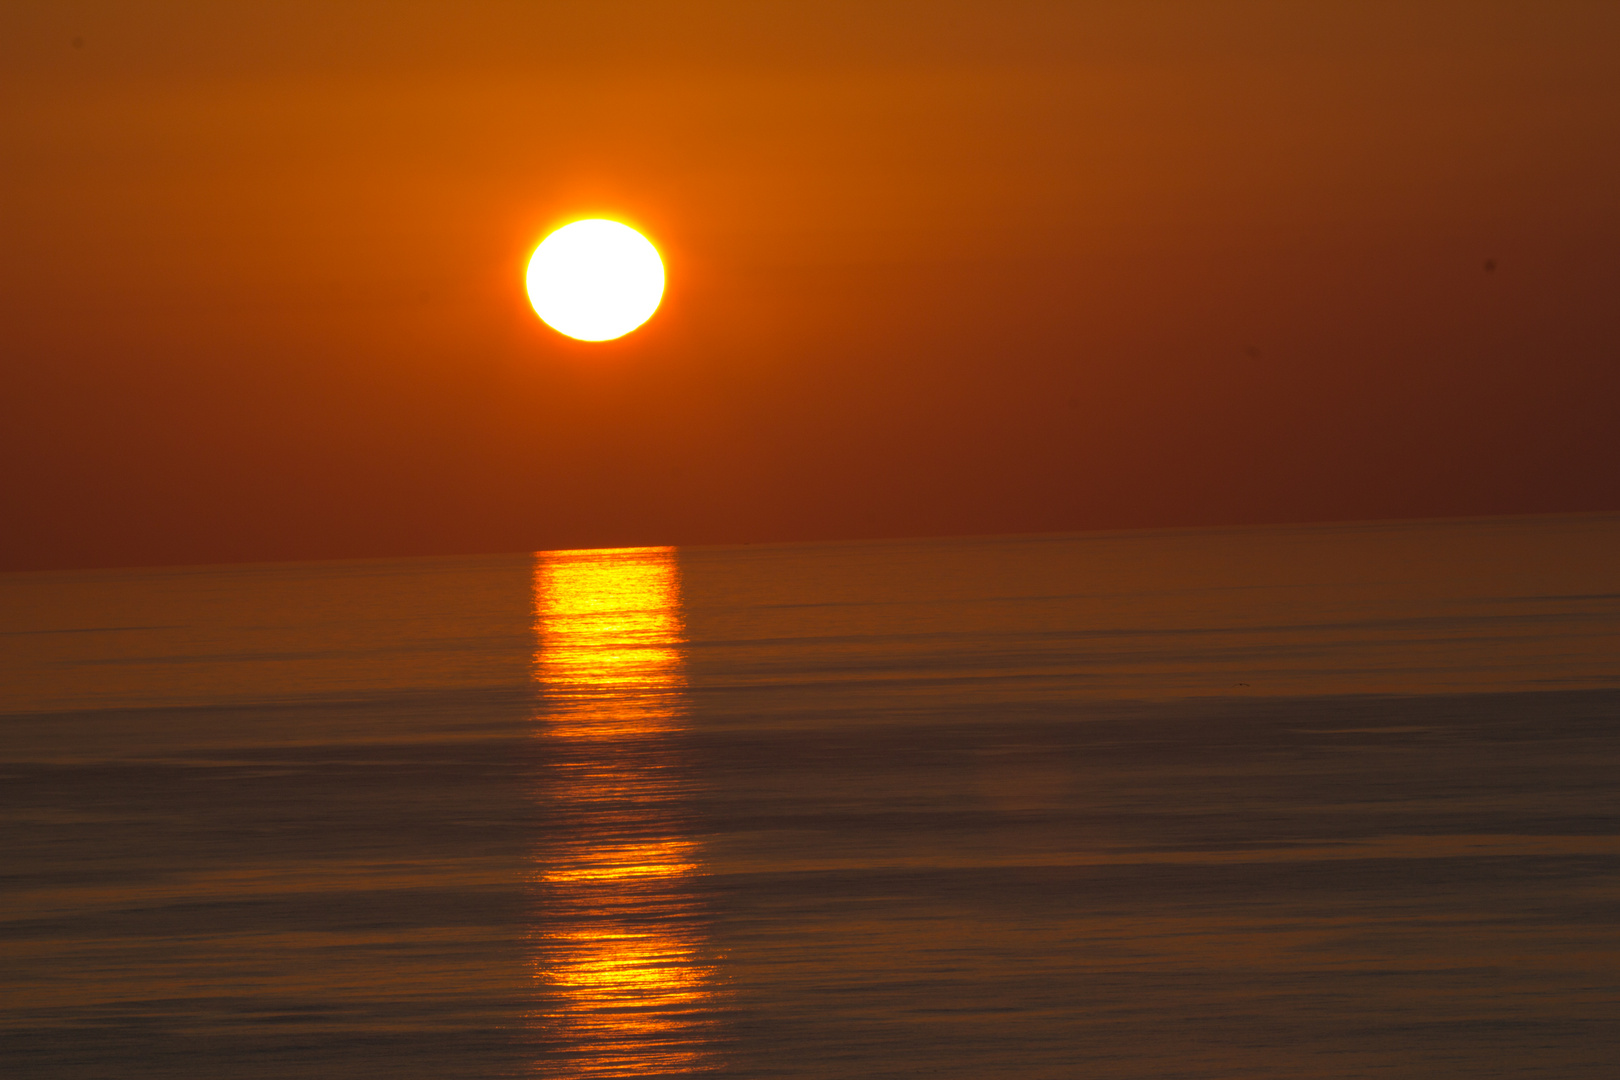 Sonnen Untergang am Mittelmeer März 2012